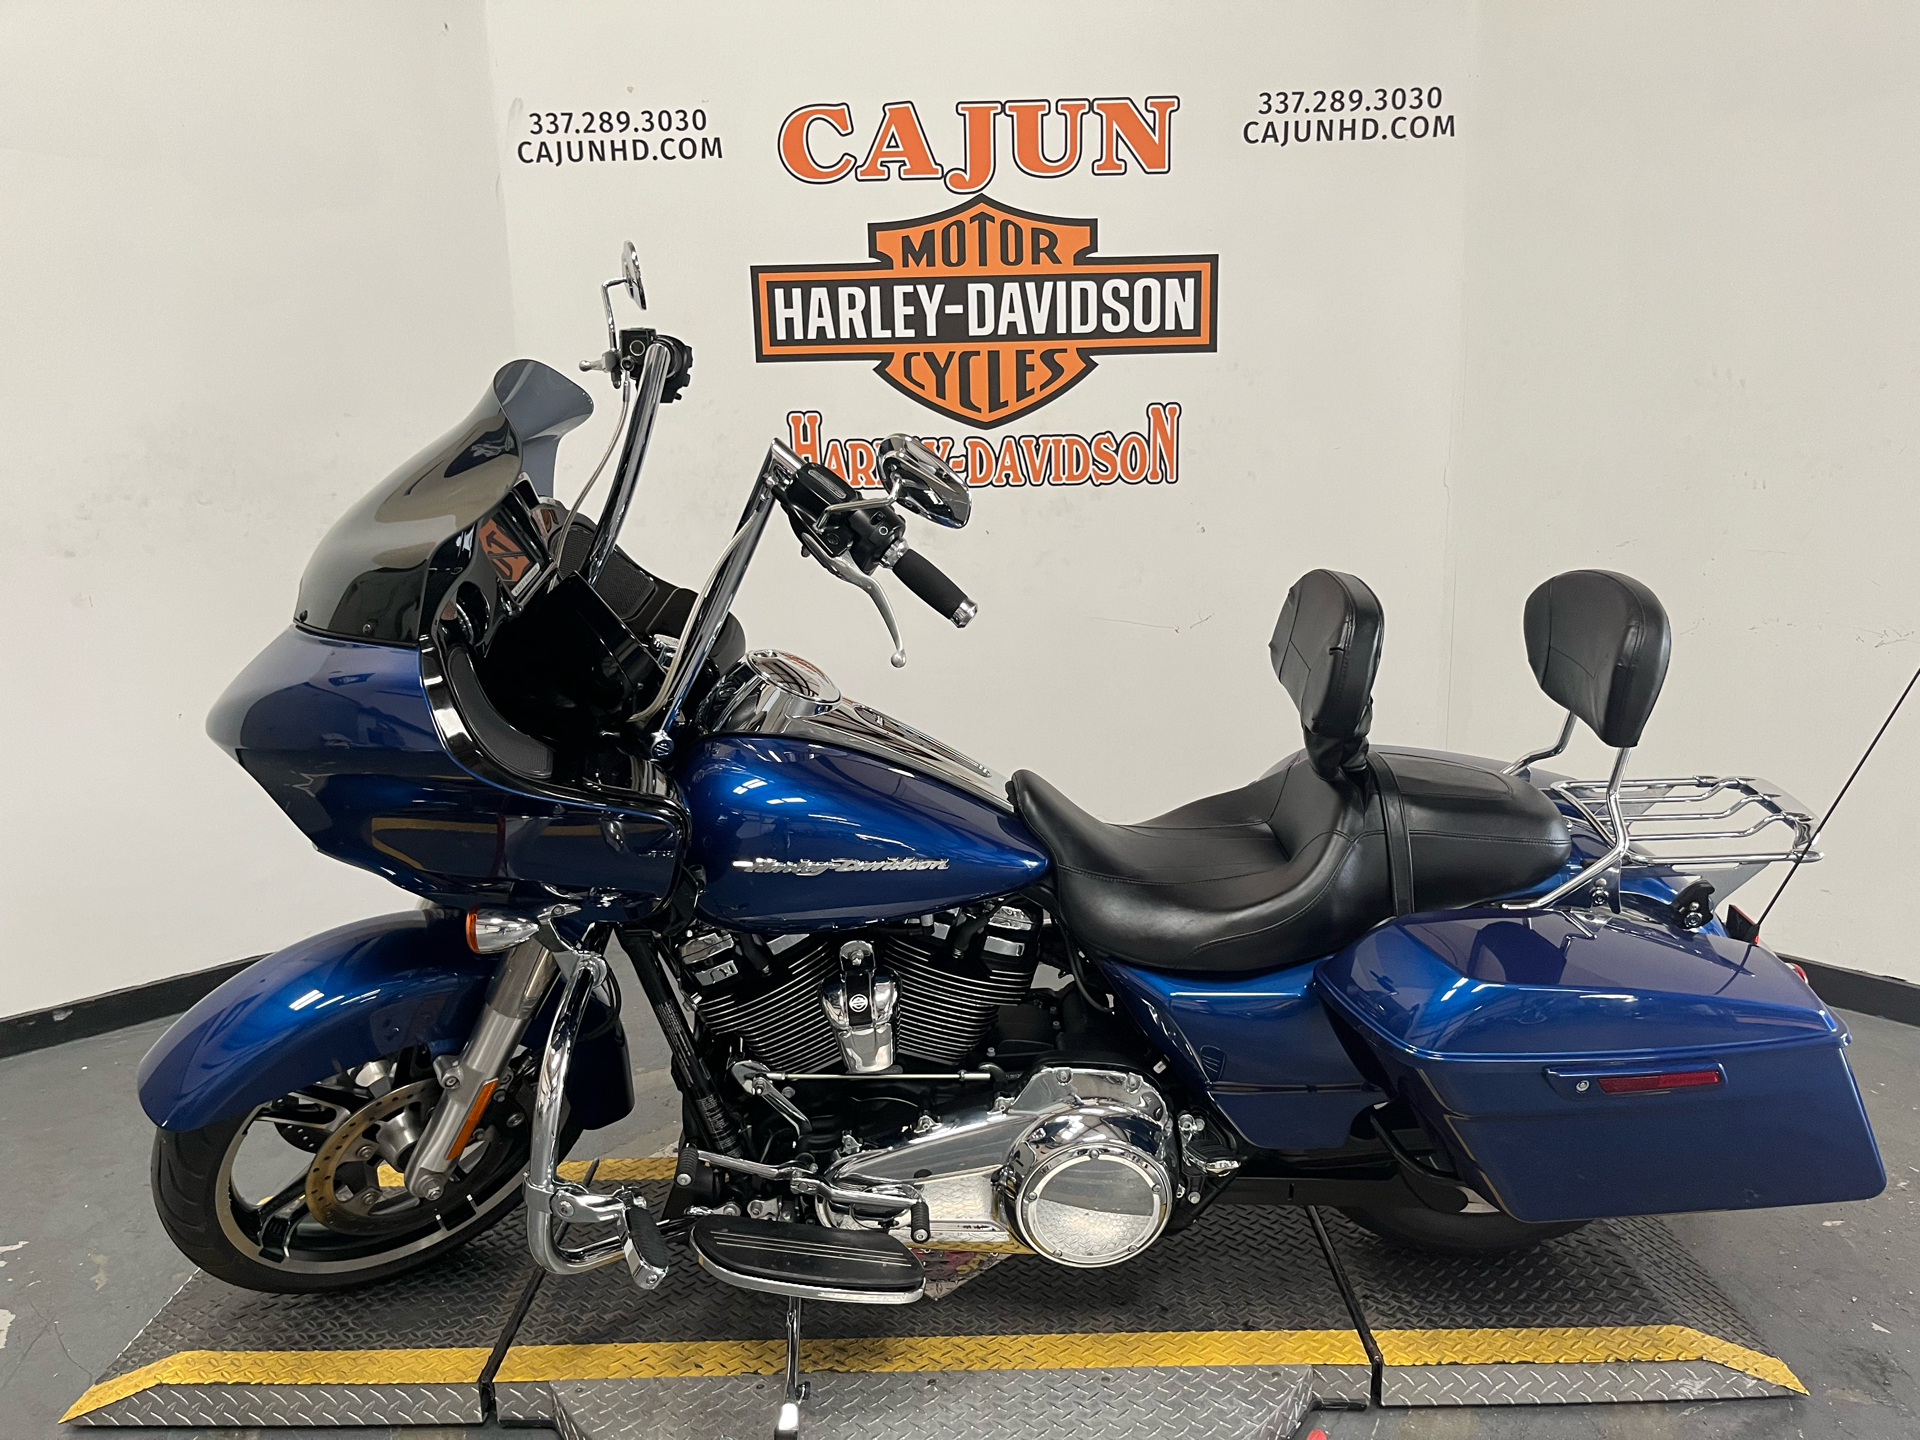 2017 Harley-Davidson Road Glide® Special in Scott, Louisiana - Photo 7